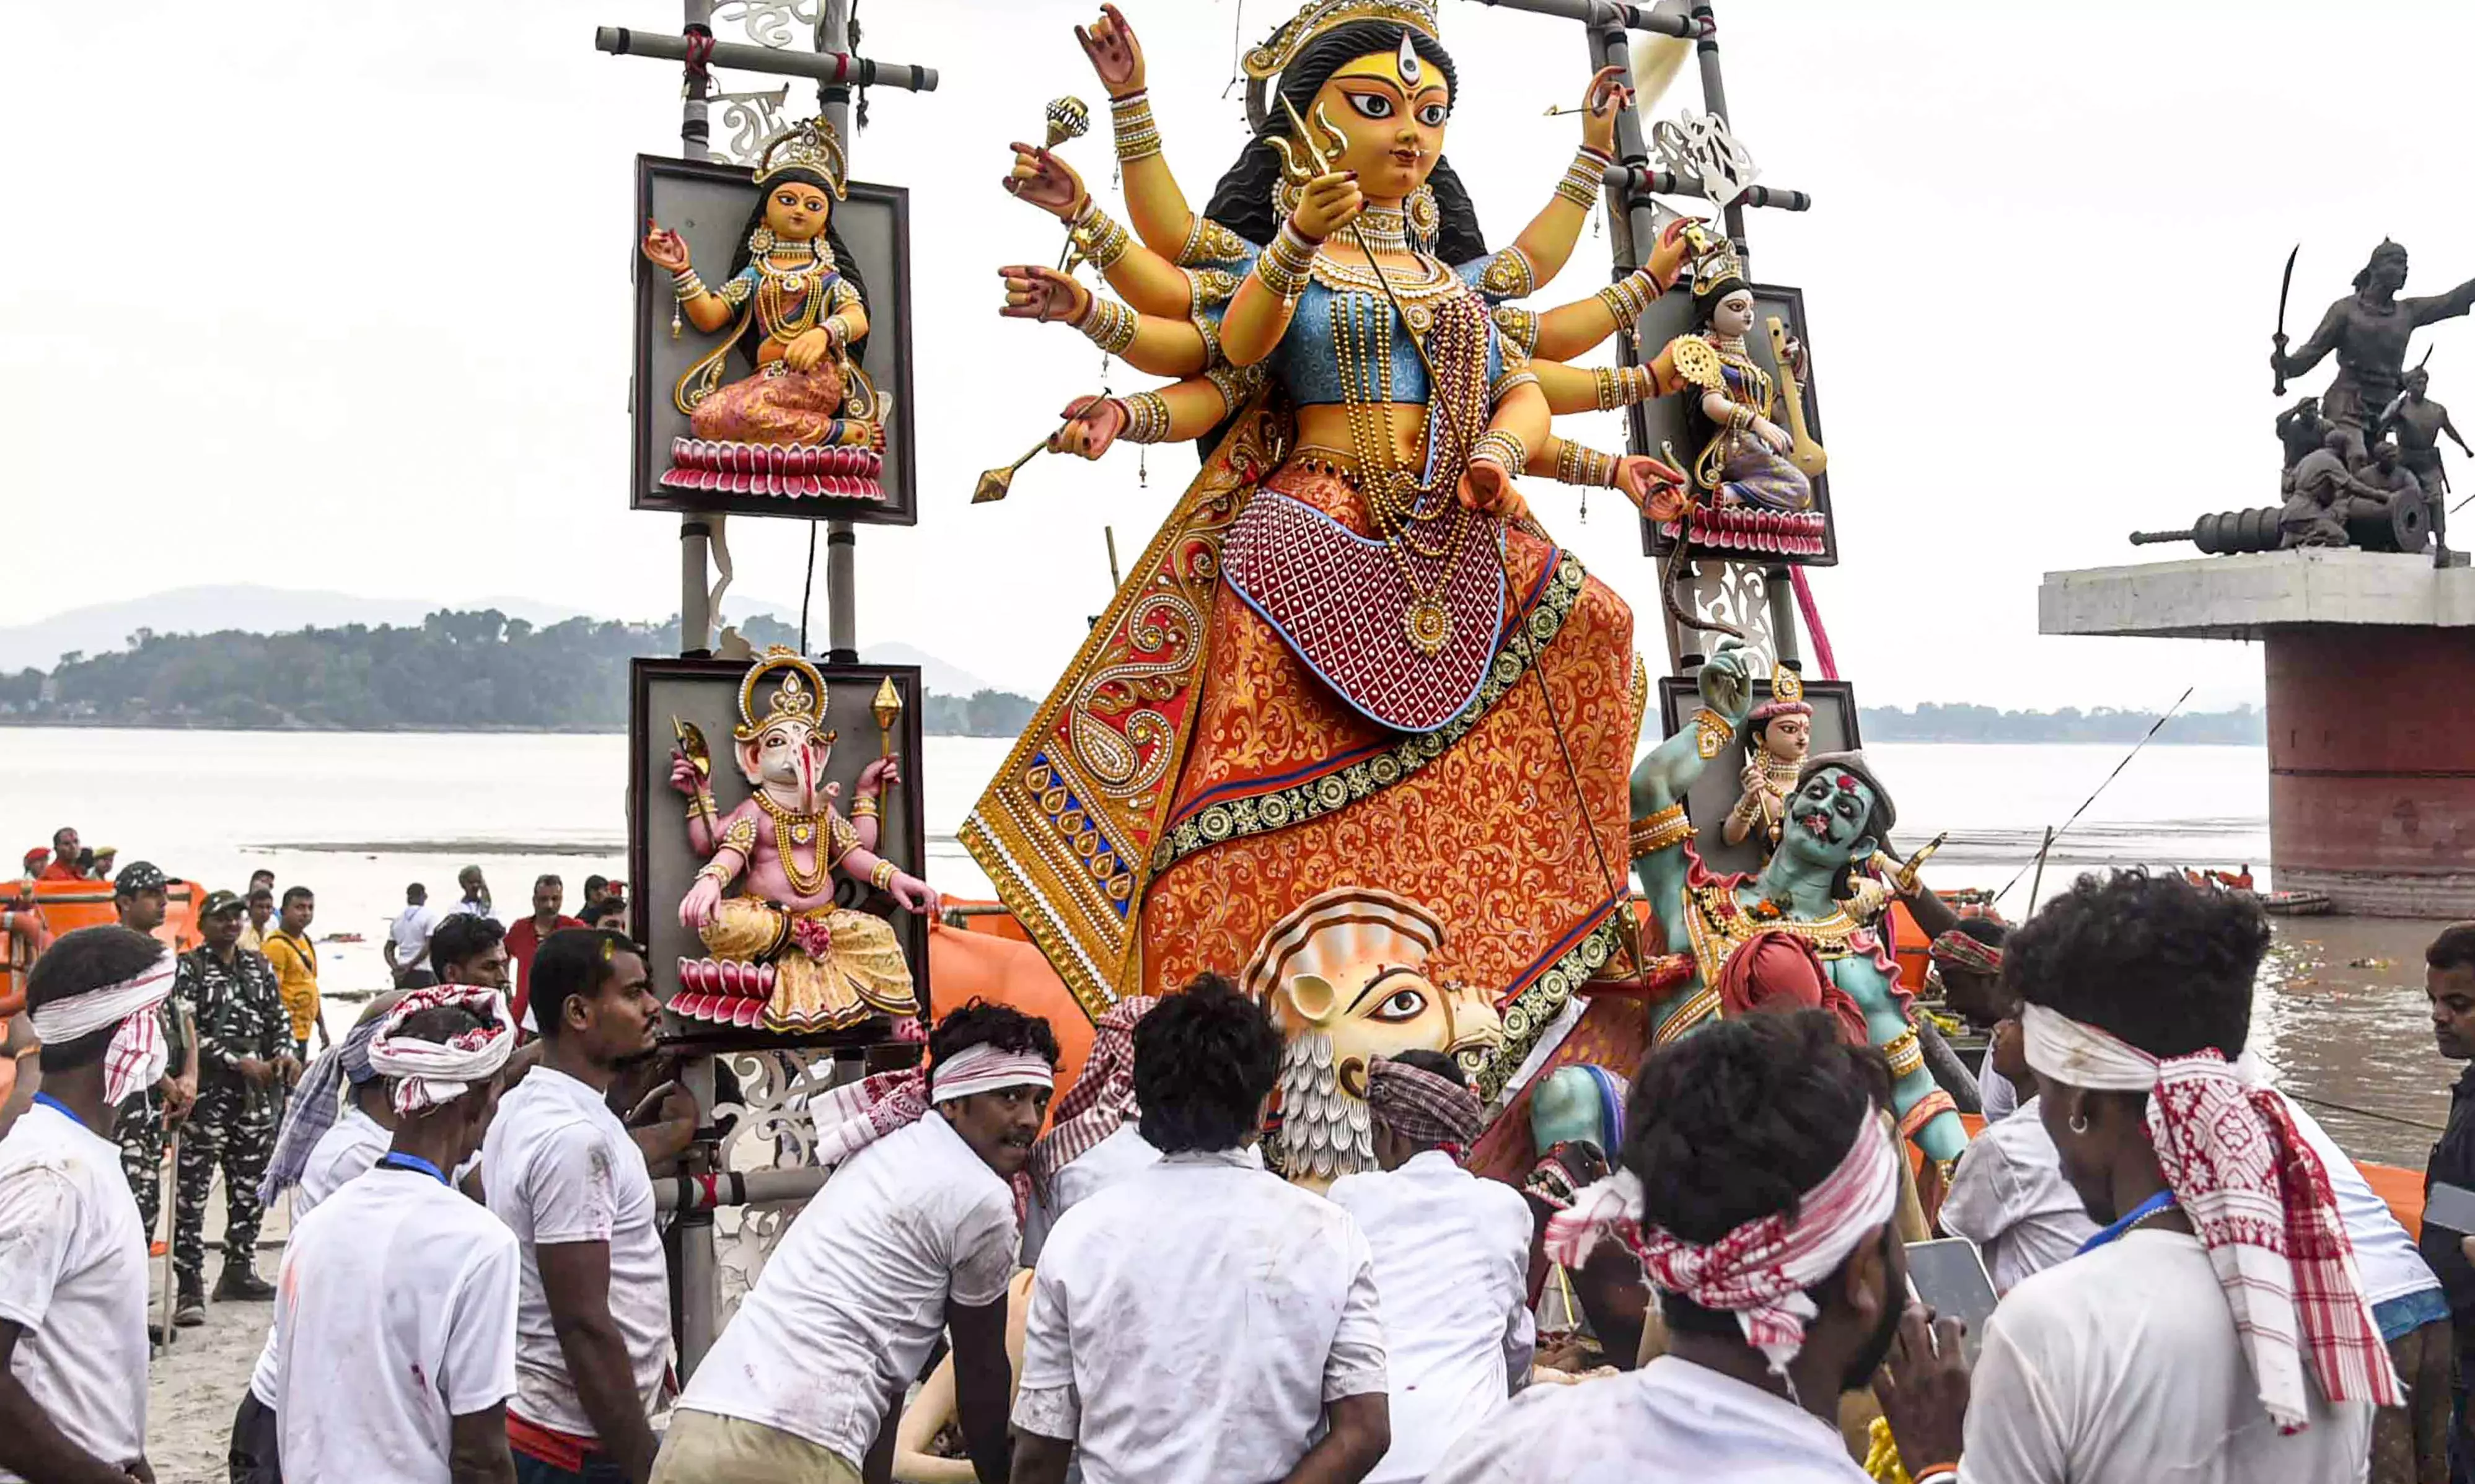 Truck overturns on Durga idol immersion procession in Jamshedpur, 2 killed, 4 injured